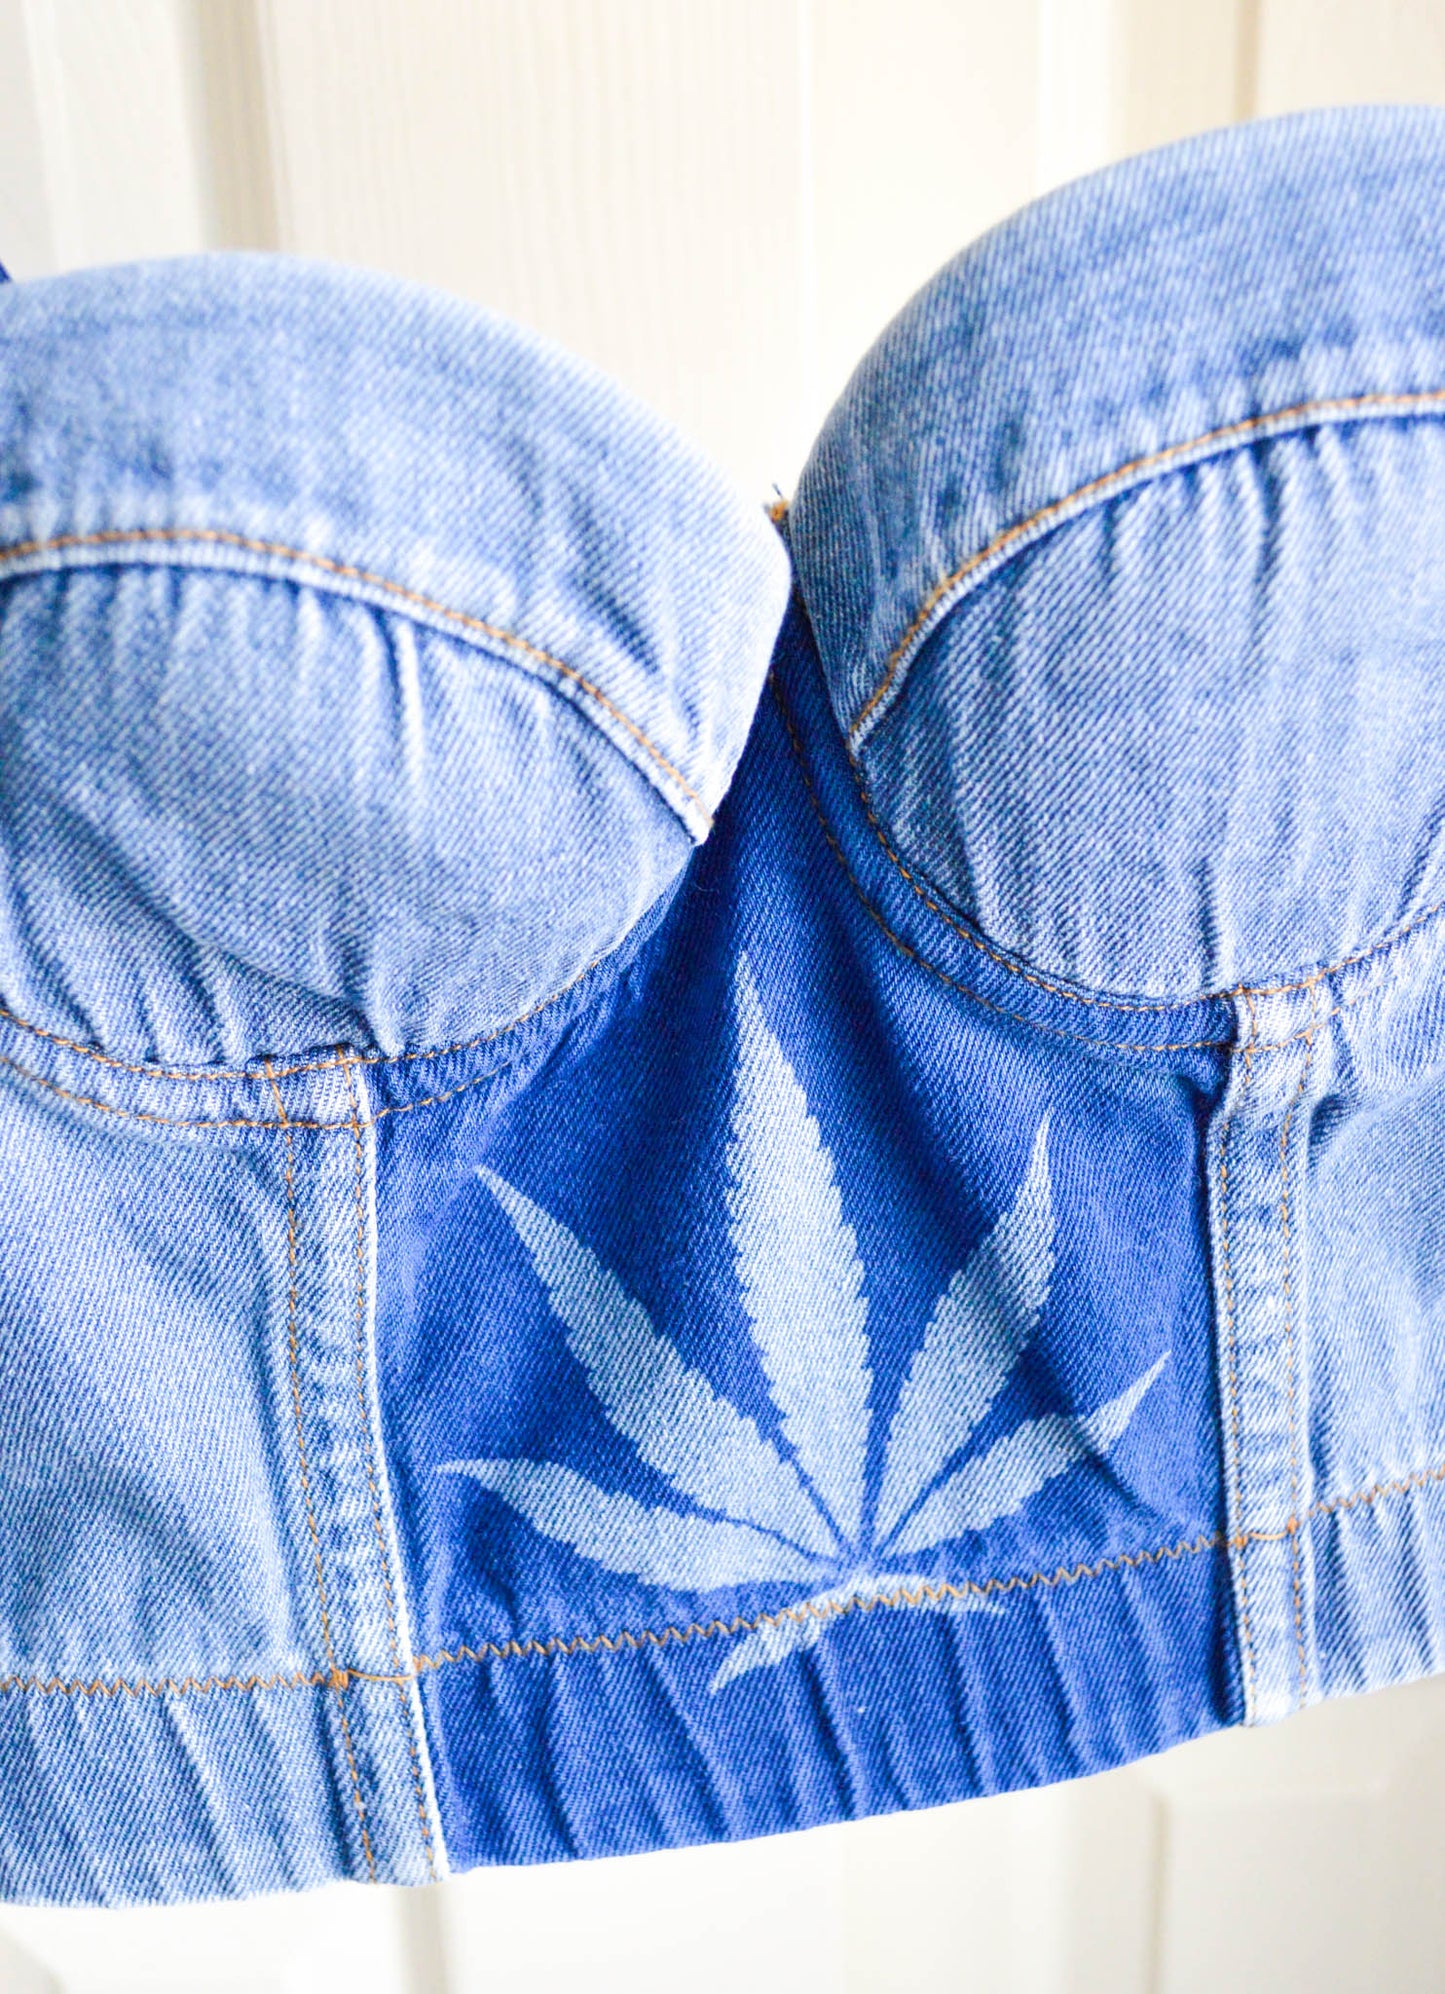 Women's X-Small Denim Cannabis Corset Top